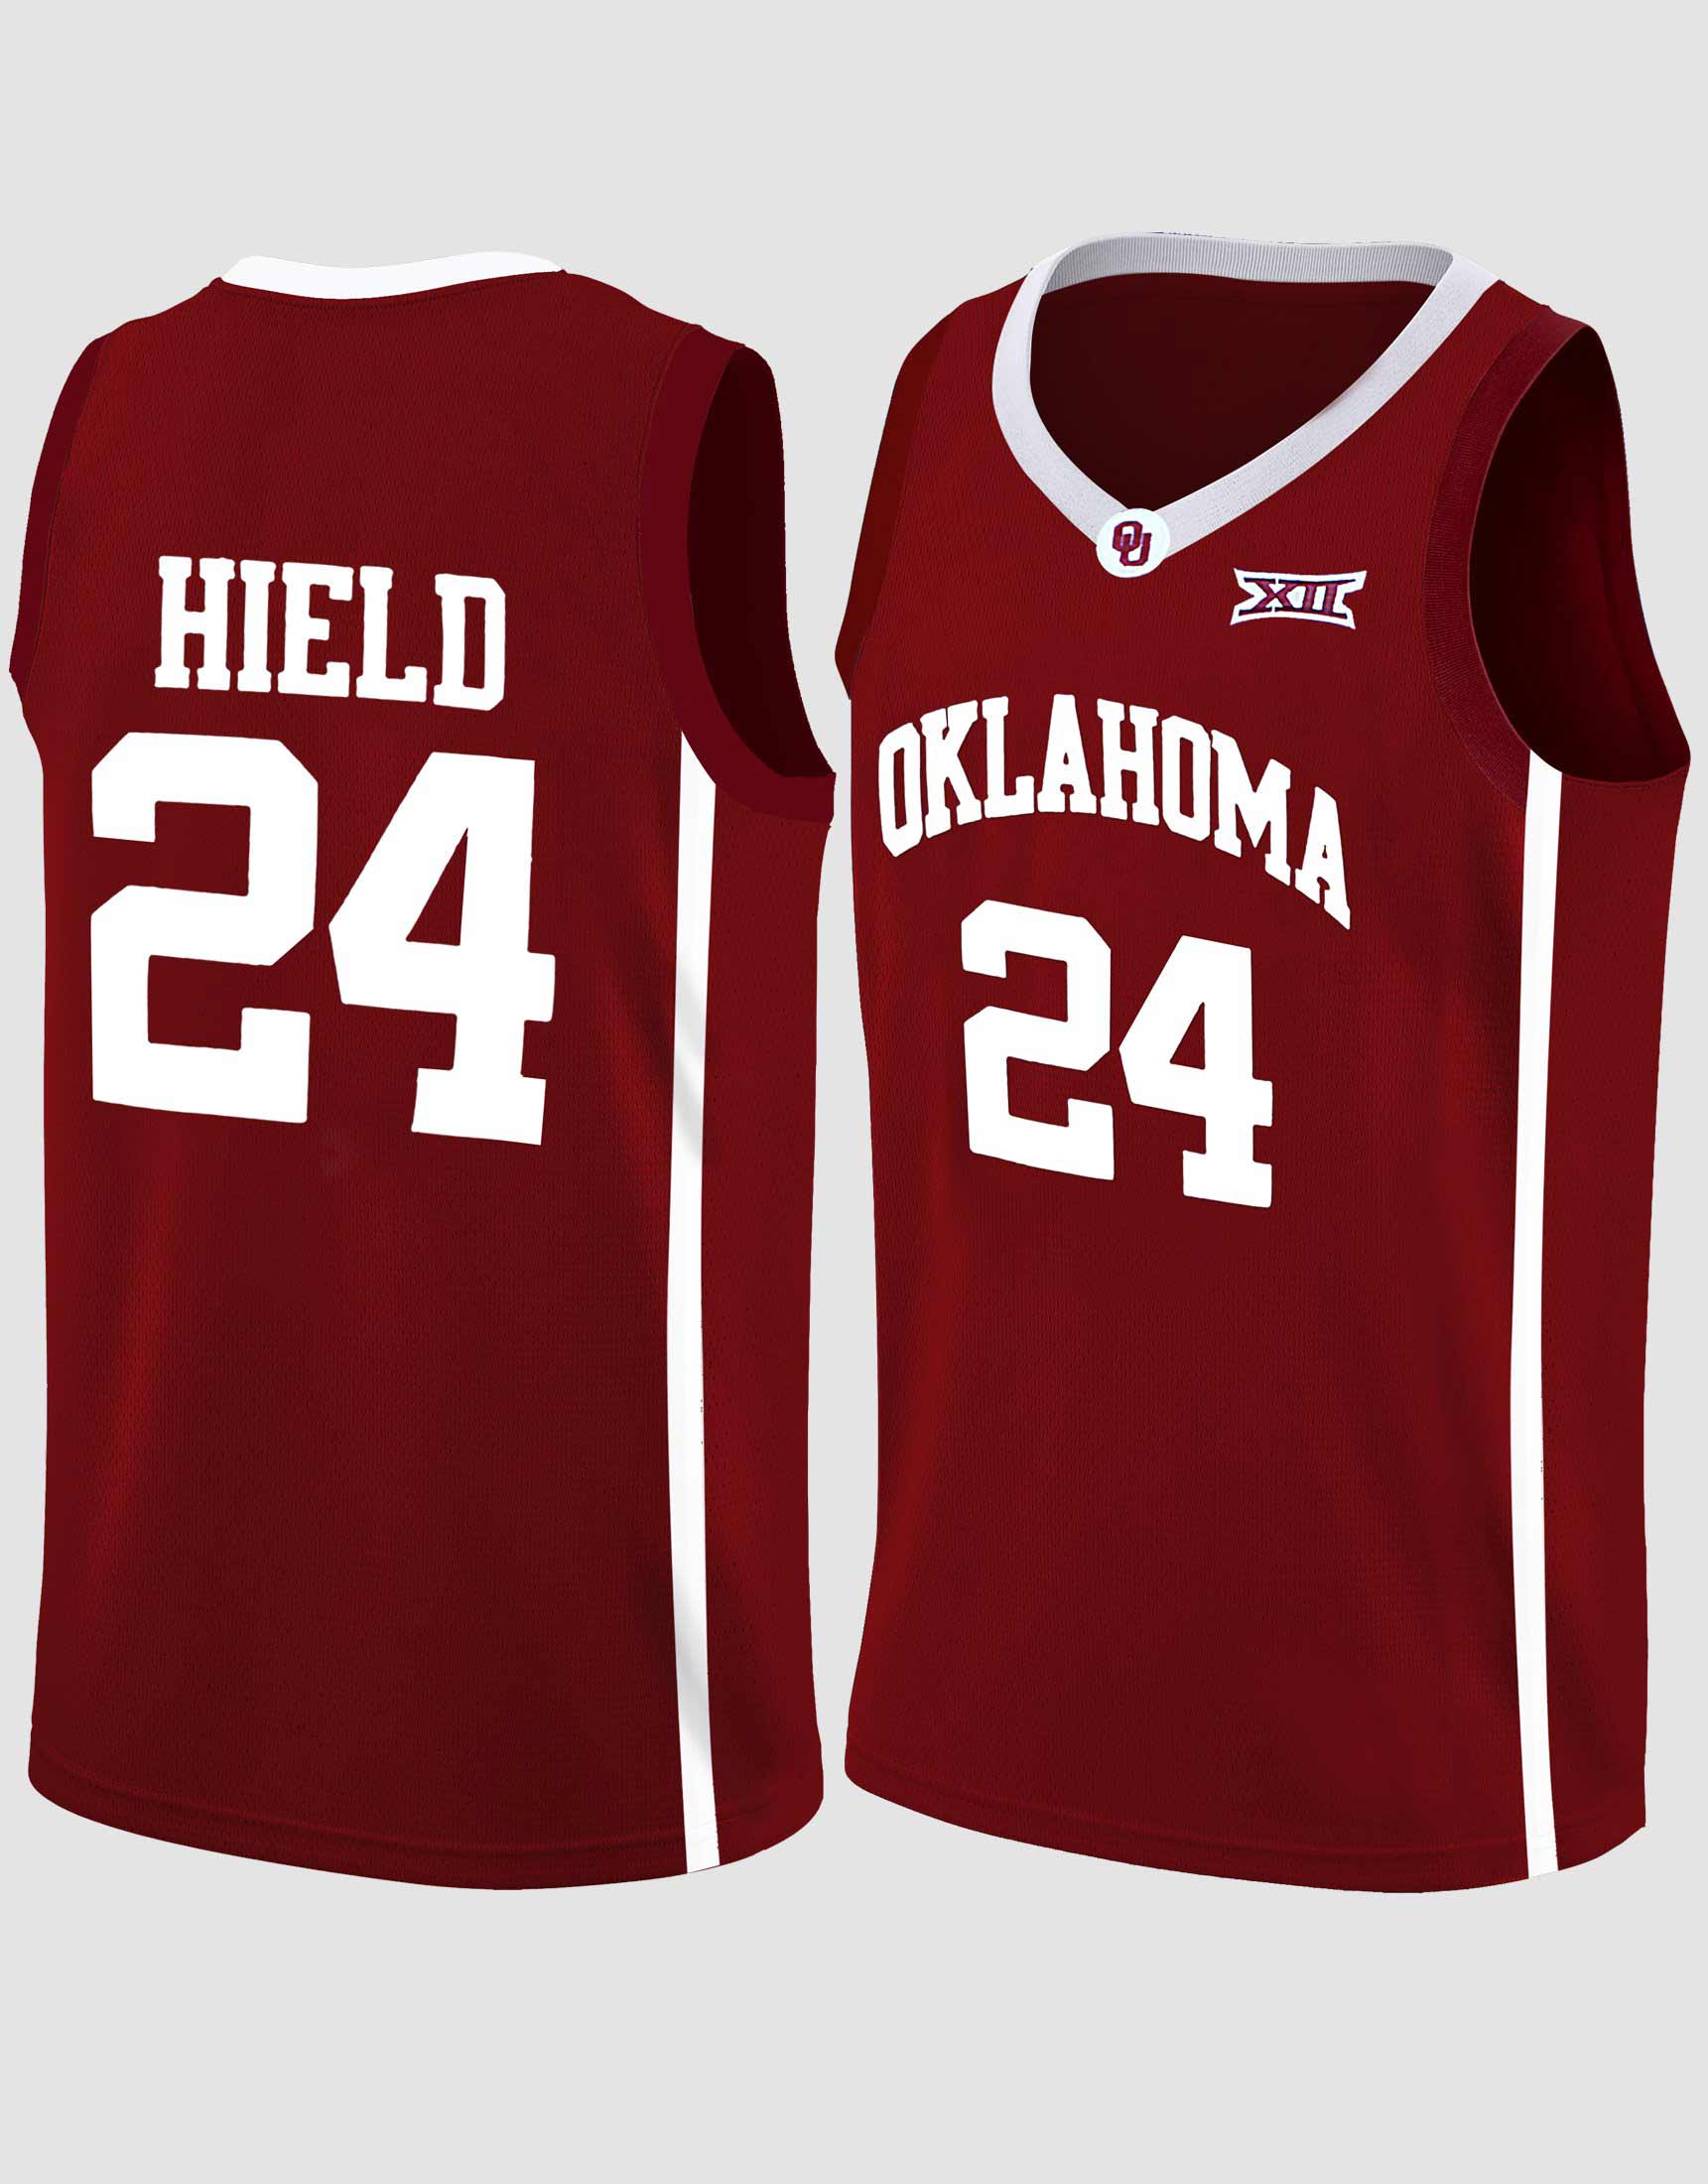 Buddy Hield #24 Oklahoma Sooners Basketball Jersey – 99Jersey